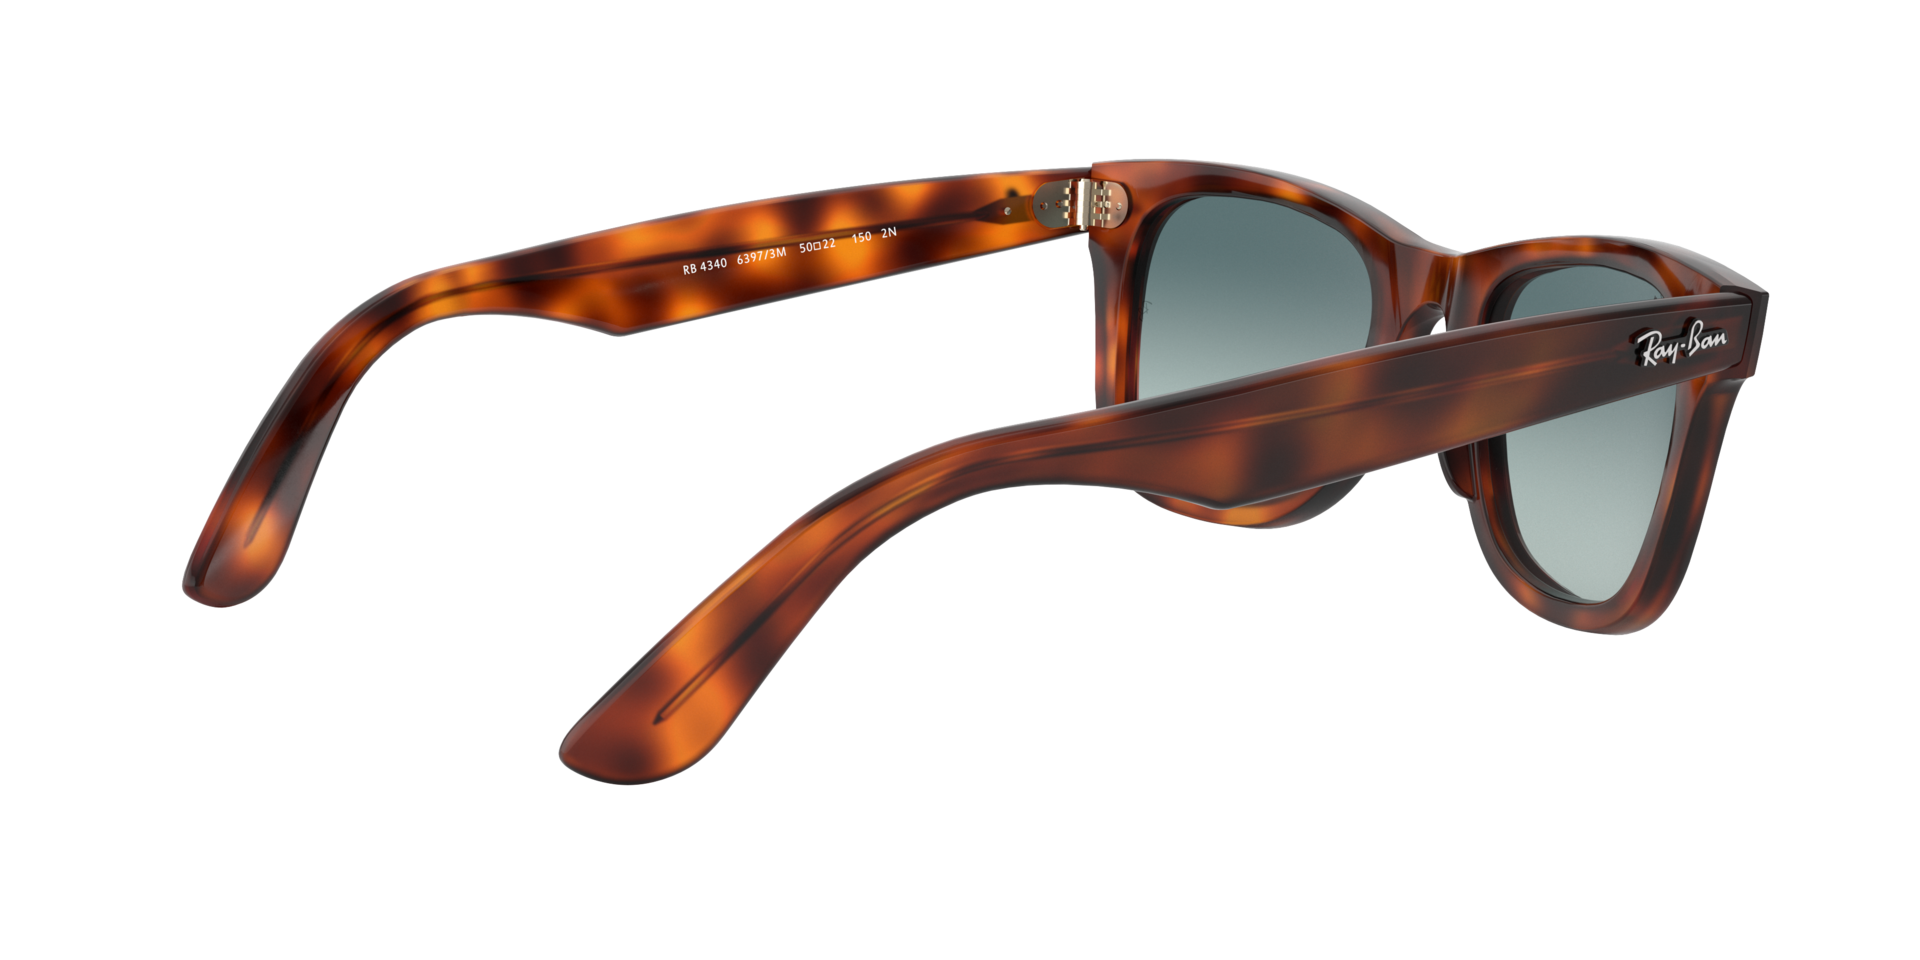 Buy Ray-Ban Wayfarer Ease Sunglasses Online.